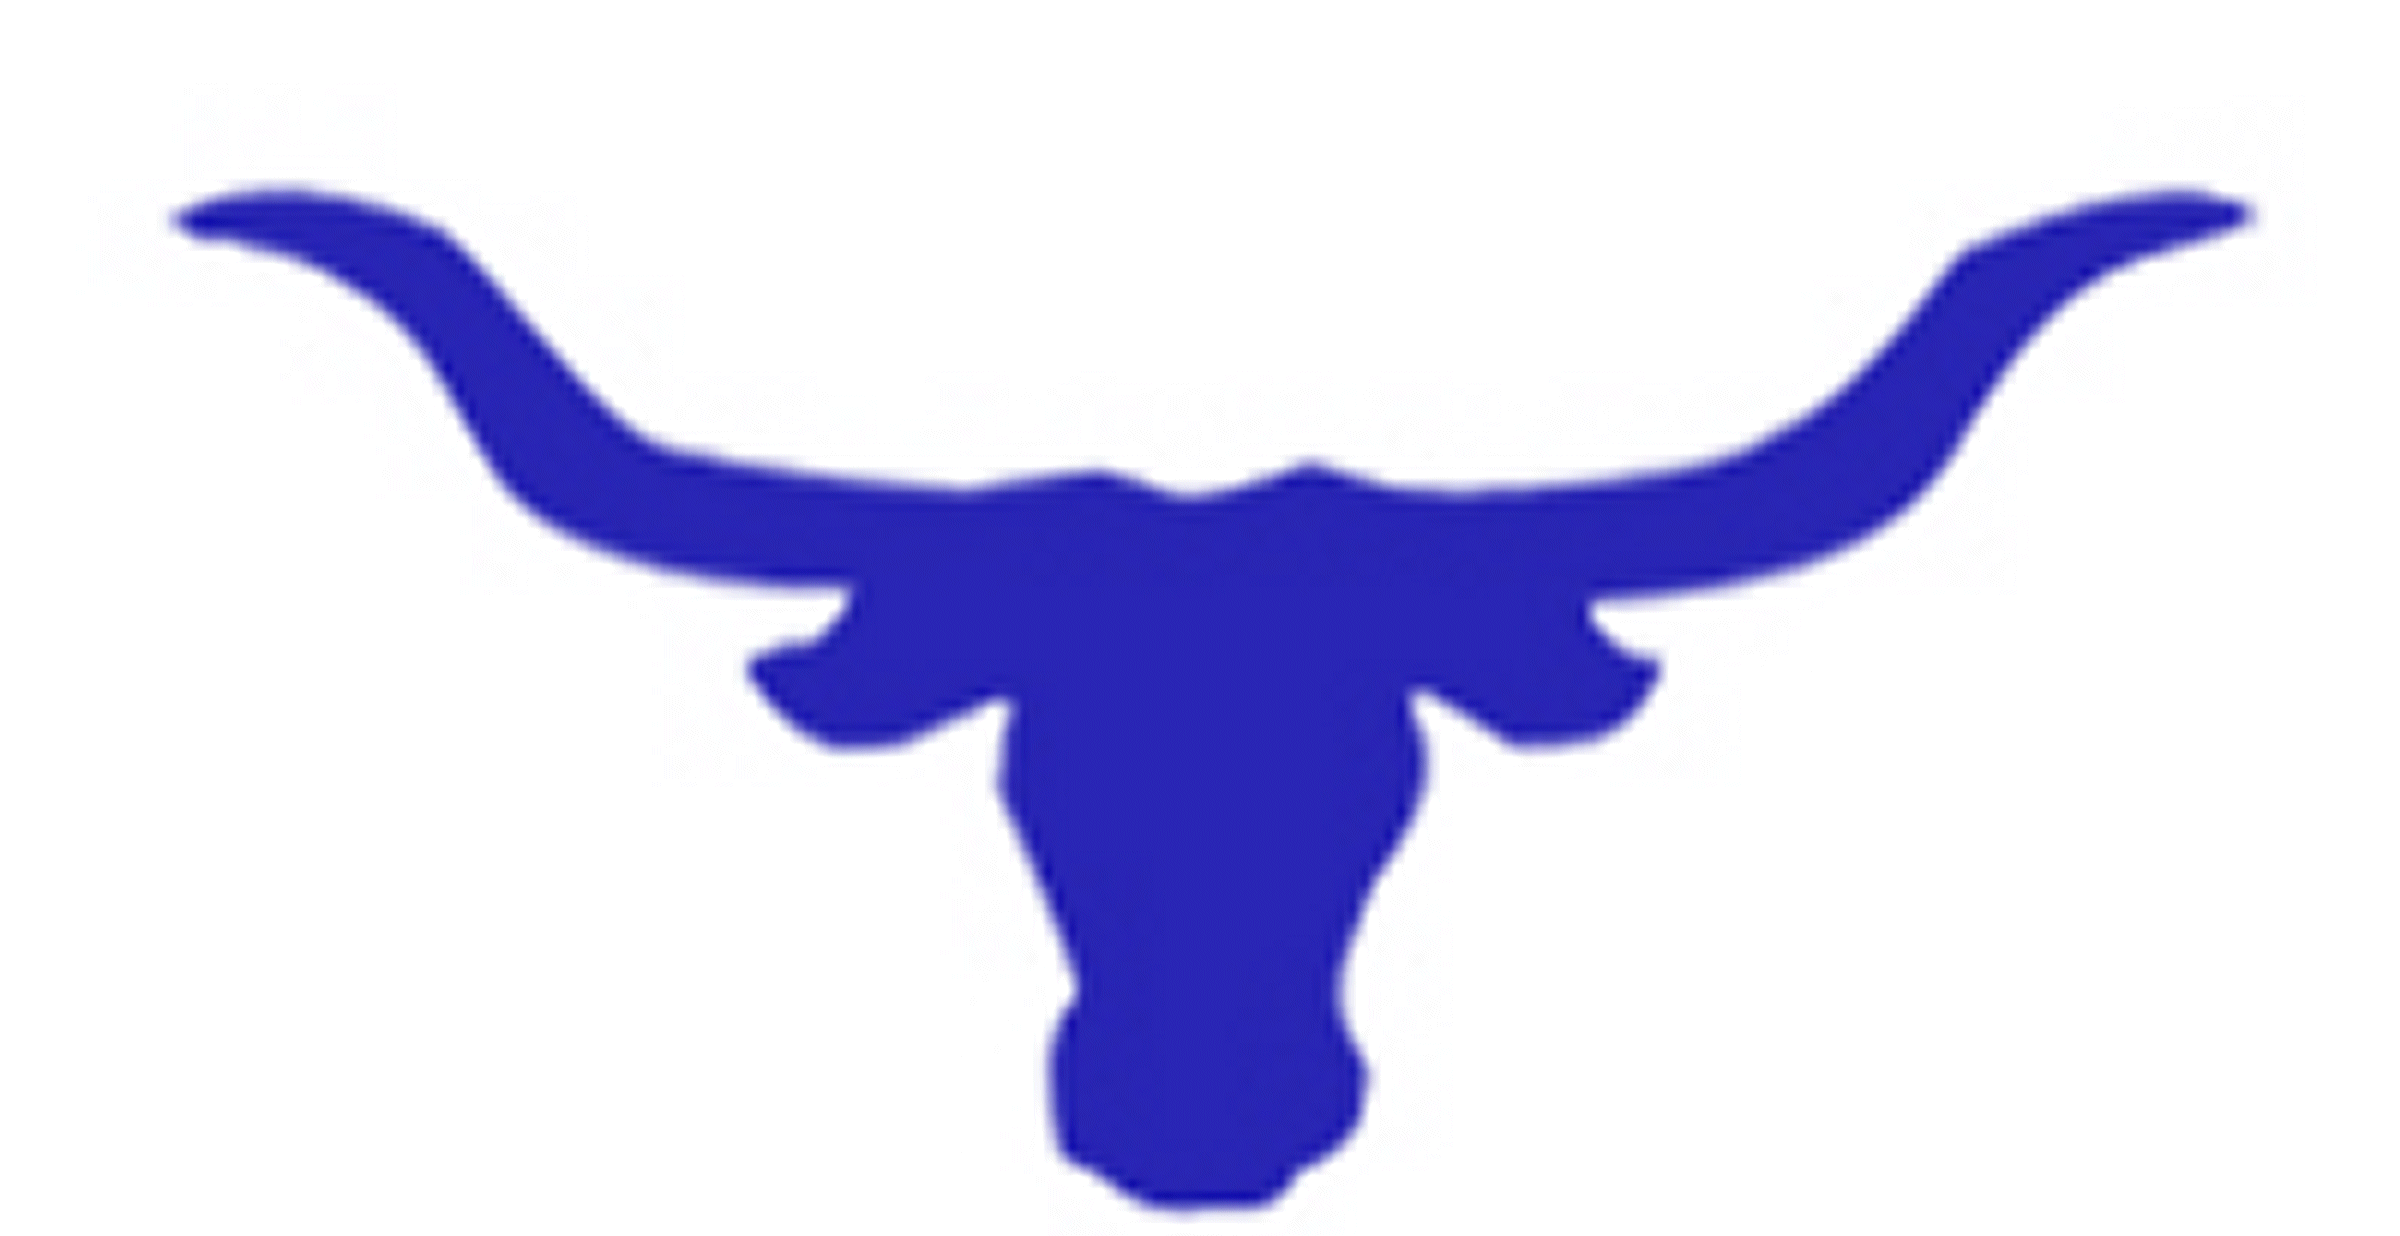 Texas high school football clipart - ClipartFox